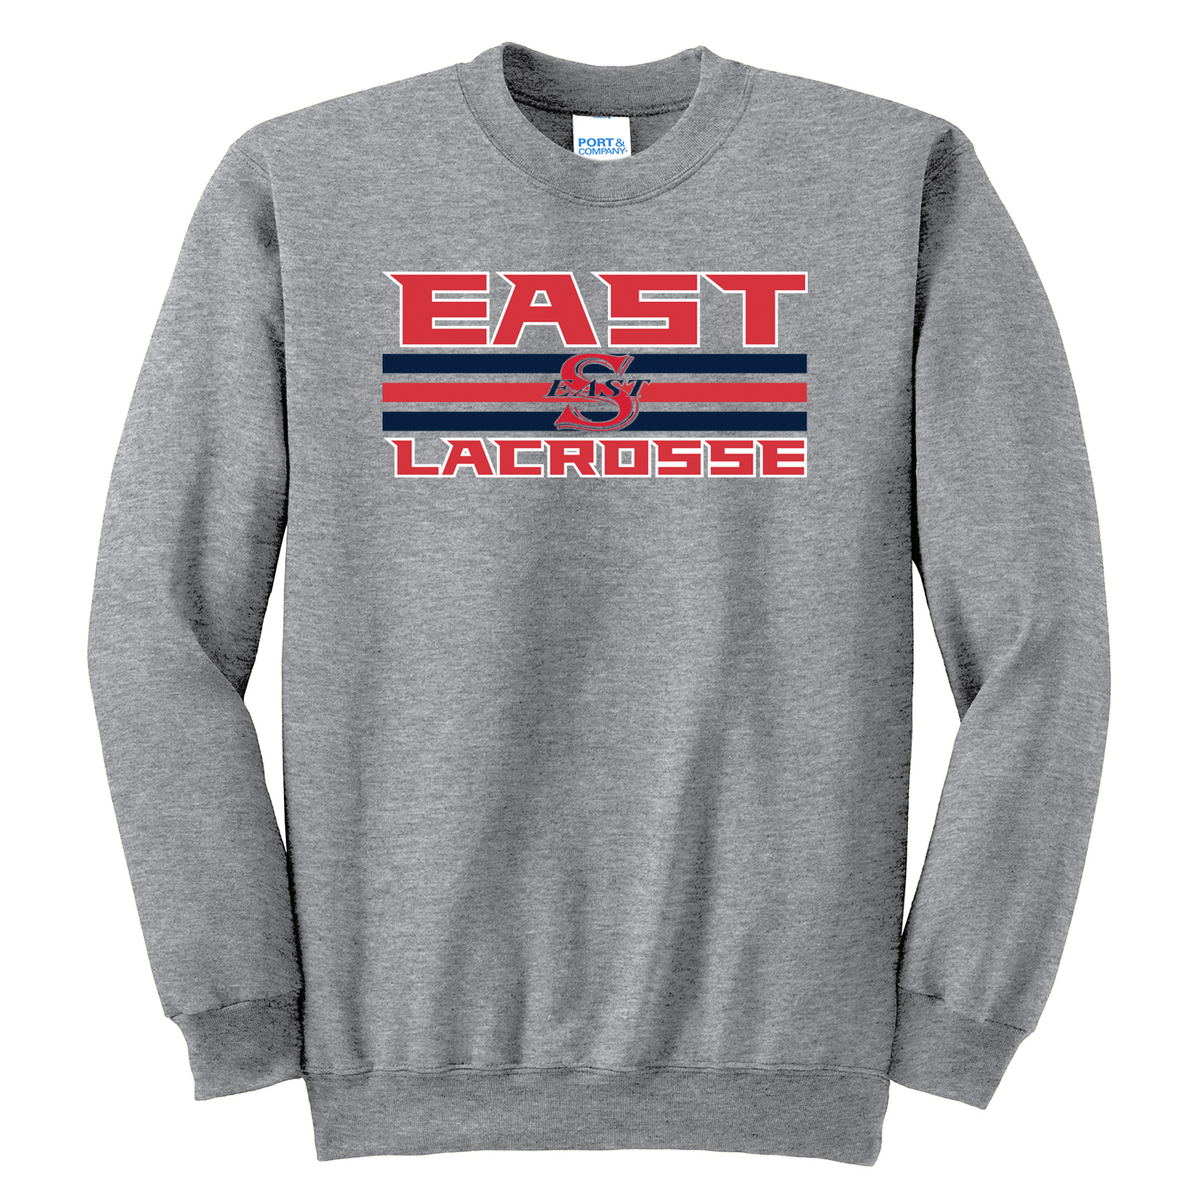 Smithtown East Girls Lacrosse Crew Neck Sweater